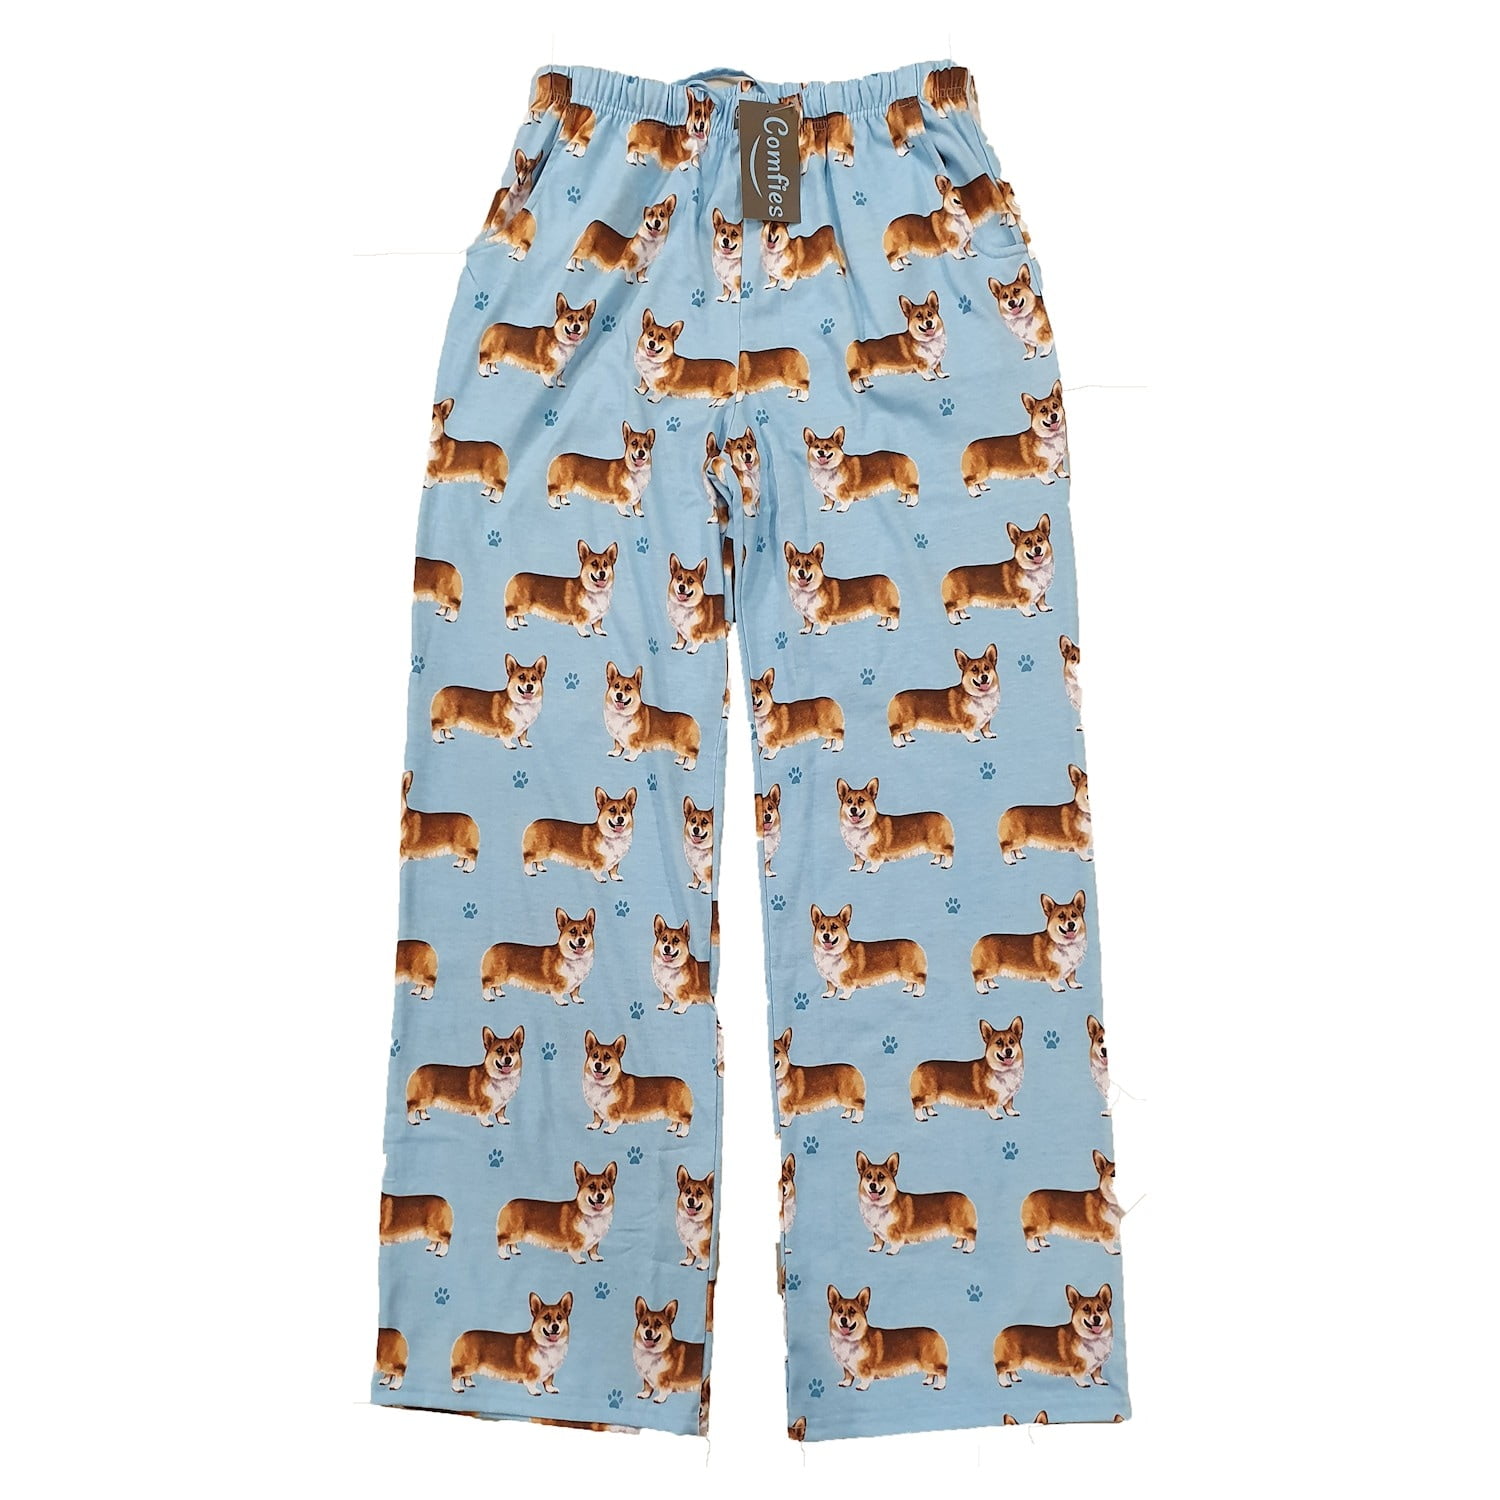 Corgi Print Cute Sleep Bottoms Knitting Cotton Pajama Shorts Women Multi  Dogs Styles Elastic Waist Loose